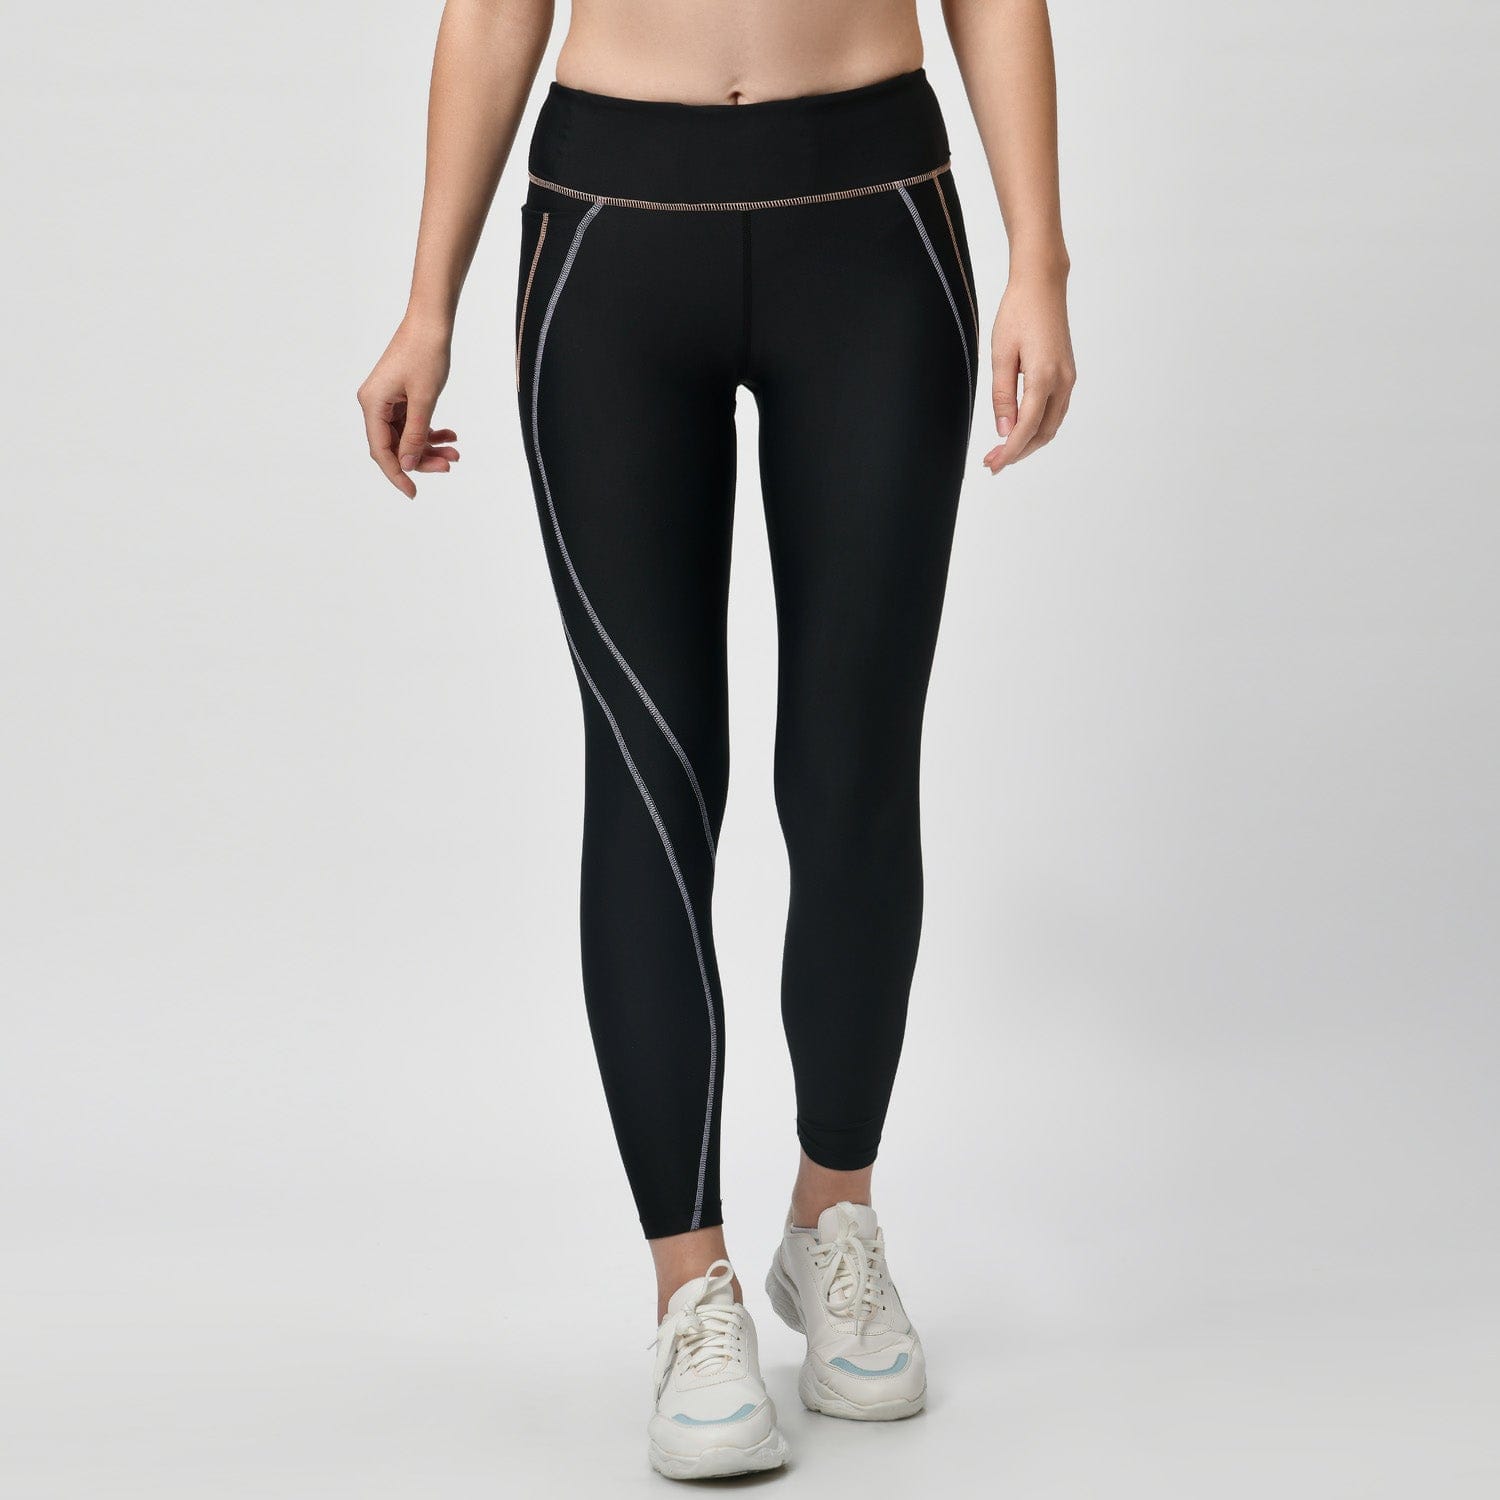 Printed Yoga Pants For Women Gym High Waist With Pockets Abdominal Control  Yoga Pants Yoga Pants 4-Way Stretchy Yoga Leggings Size - XS,S, M, L, XL,  2XL, at Rs 1449.00